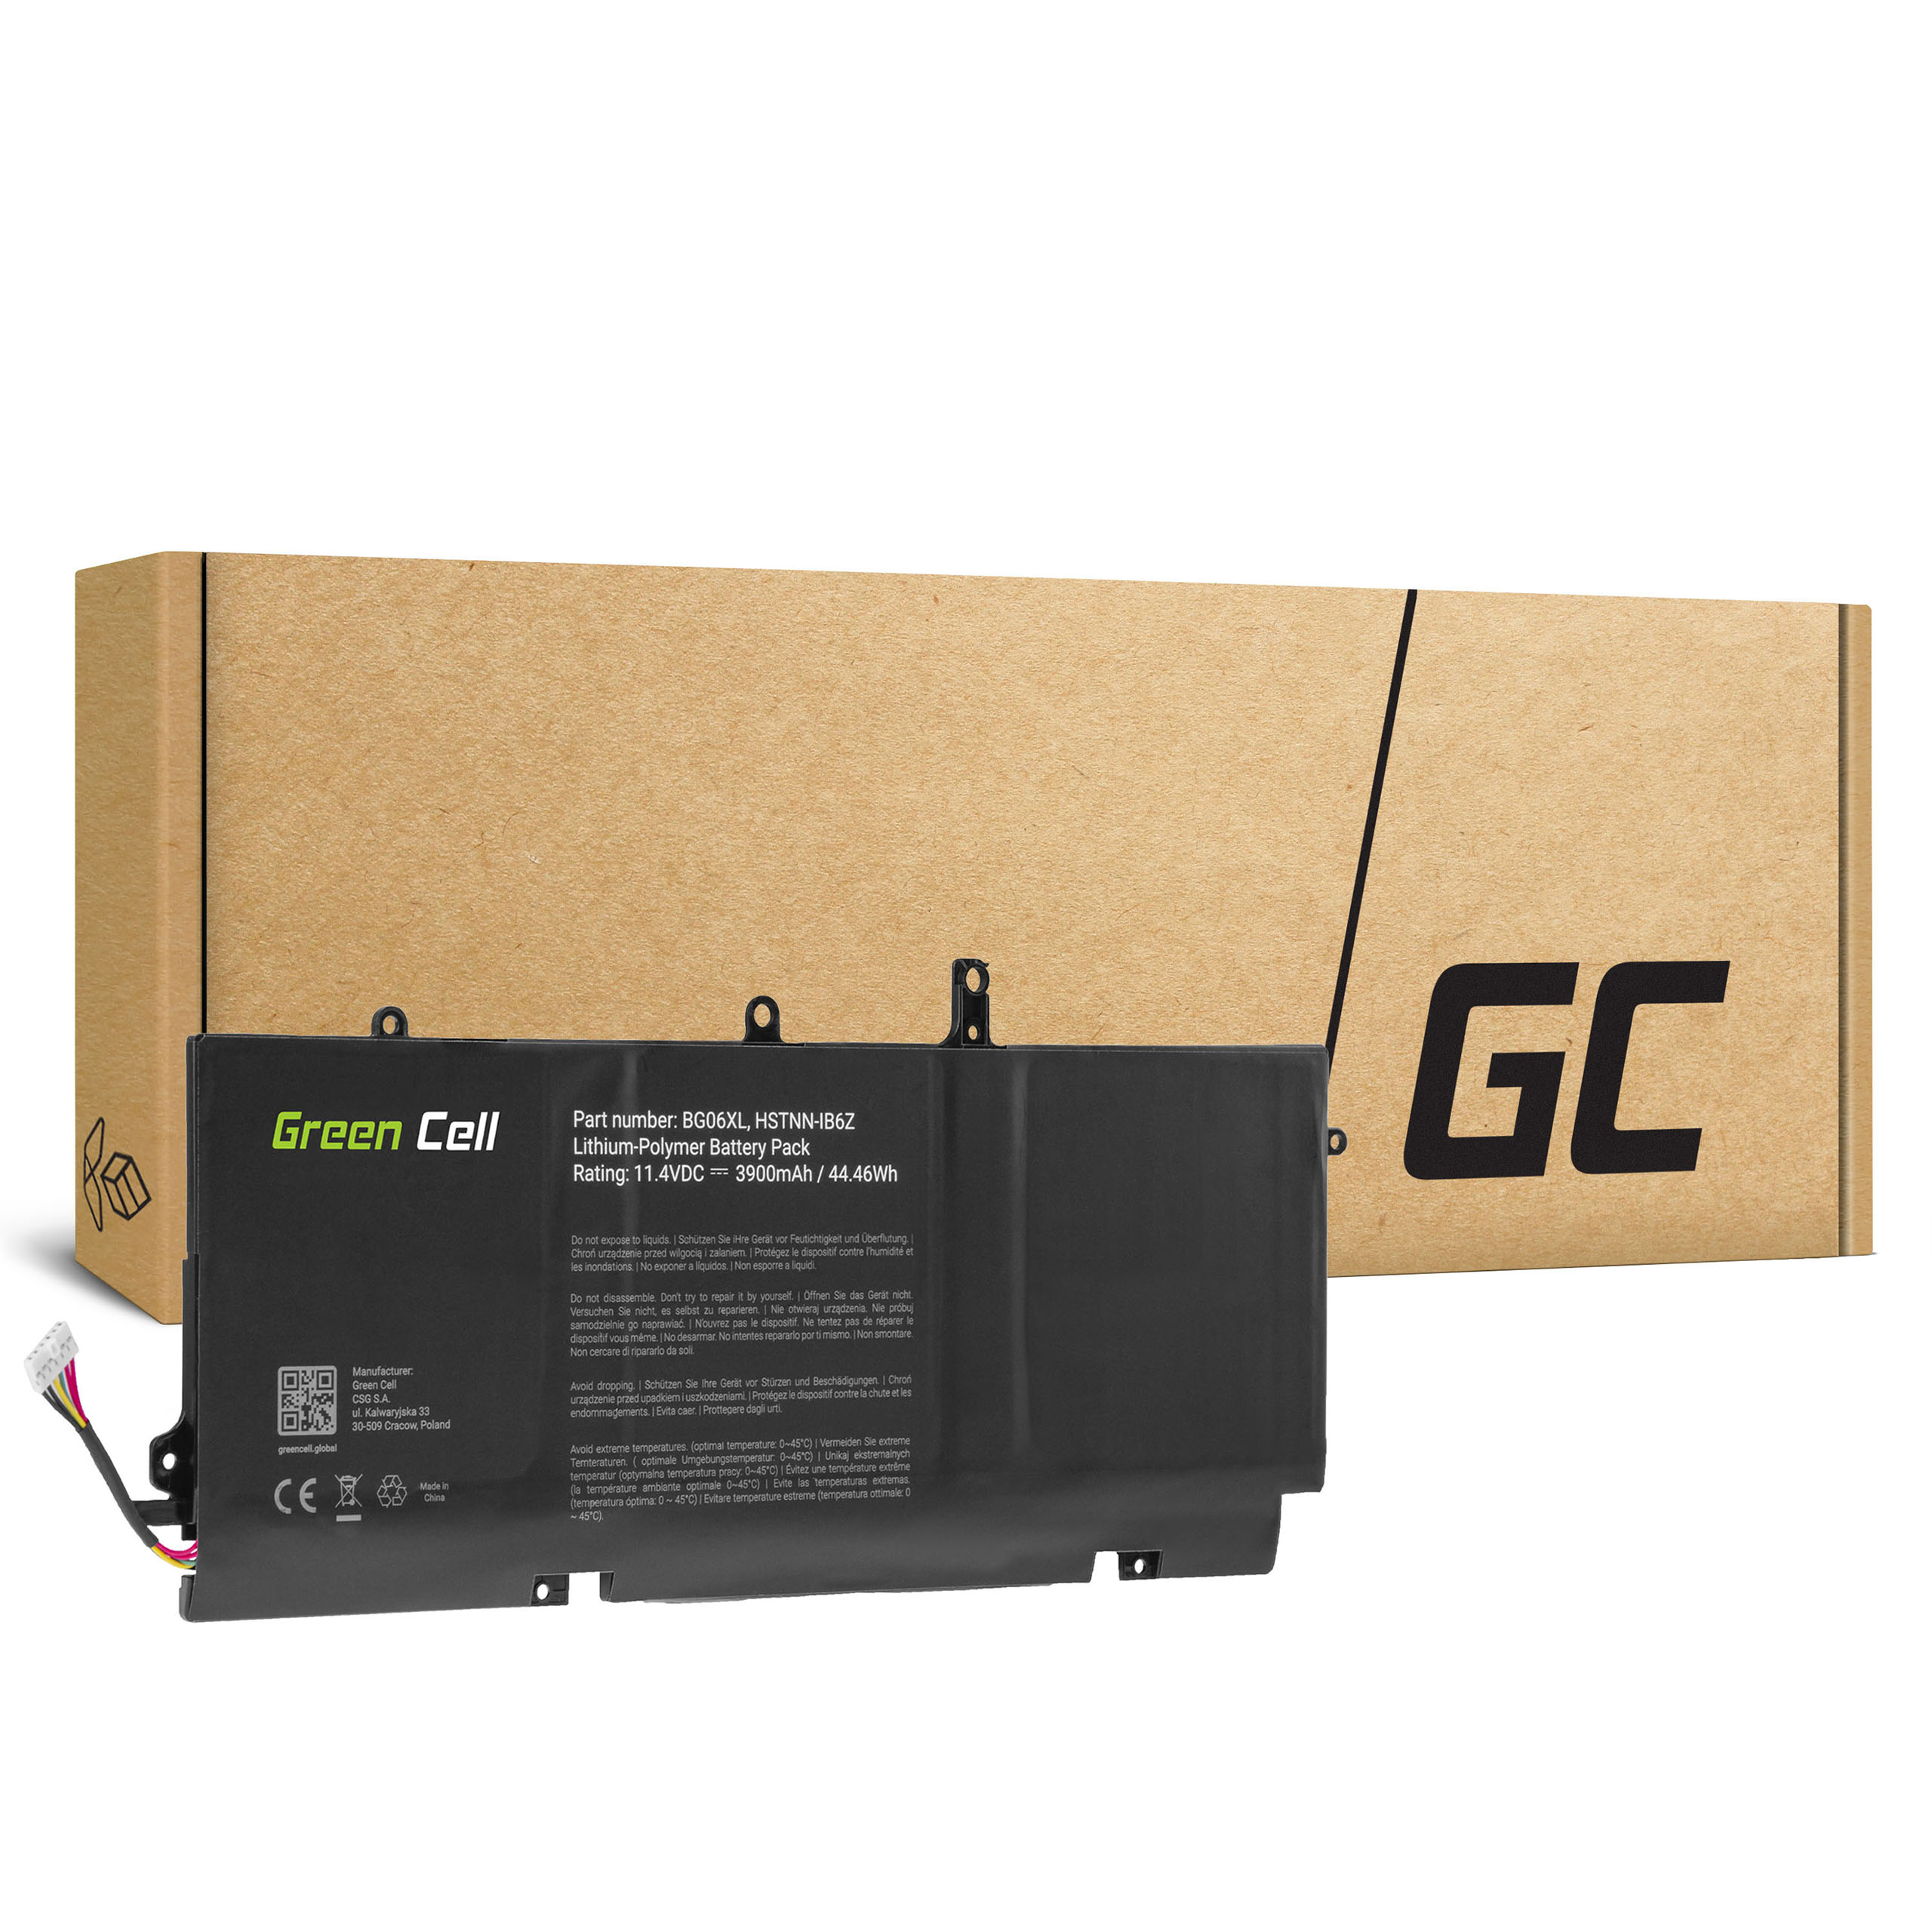 Green Cell HP179 Baterie HP BG06XL 805096-005 pro HP EliteBook Folio 1040 G3 3700mAh Li-Pol